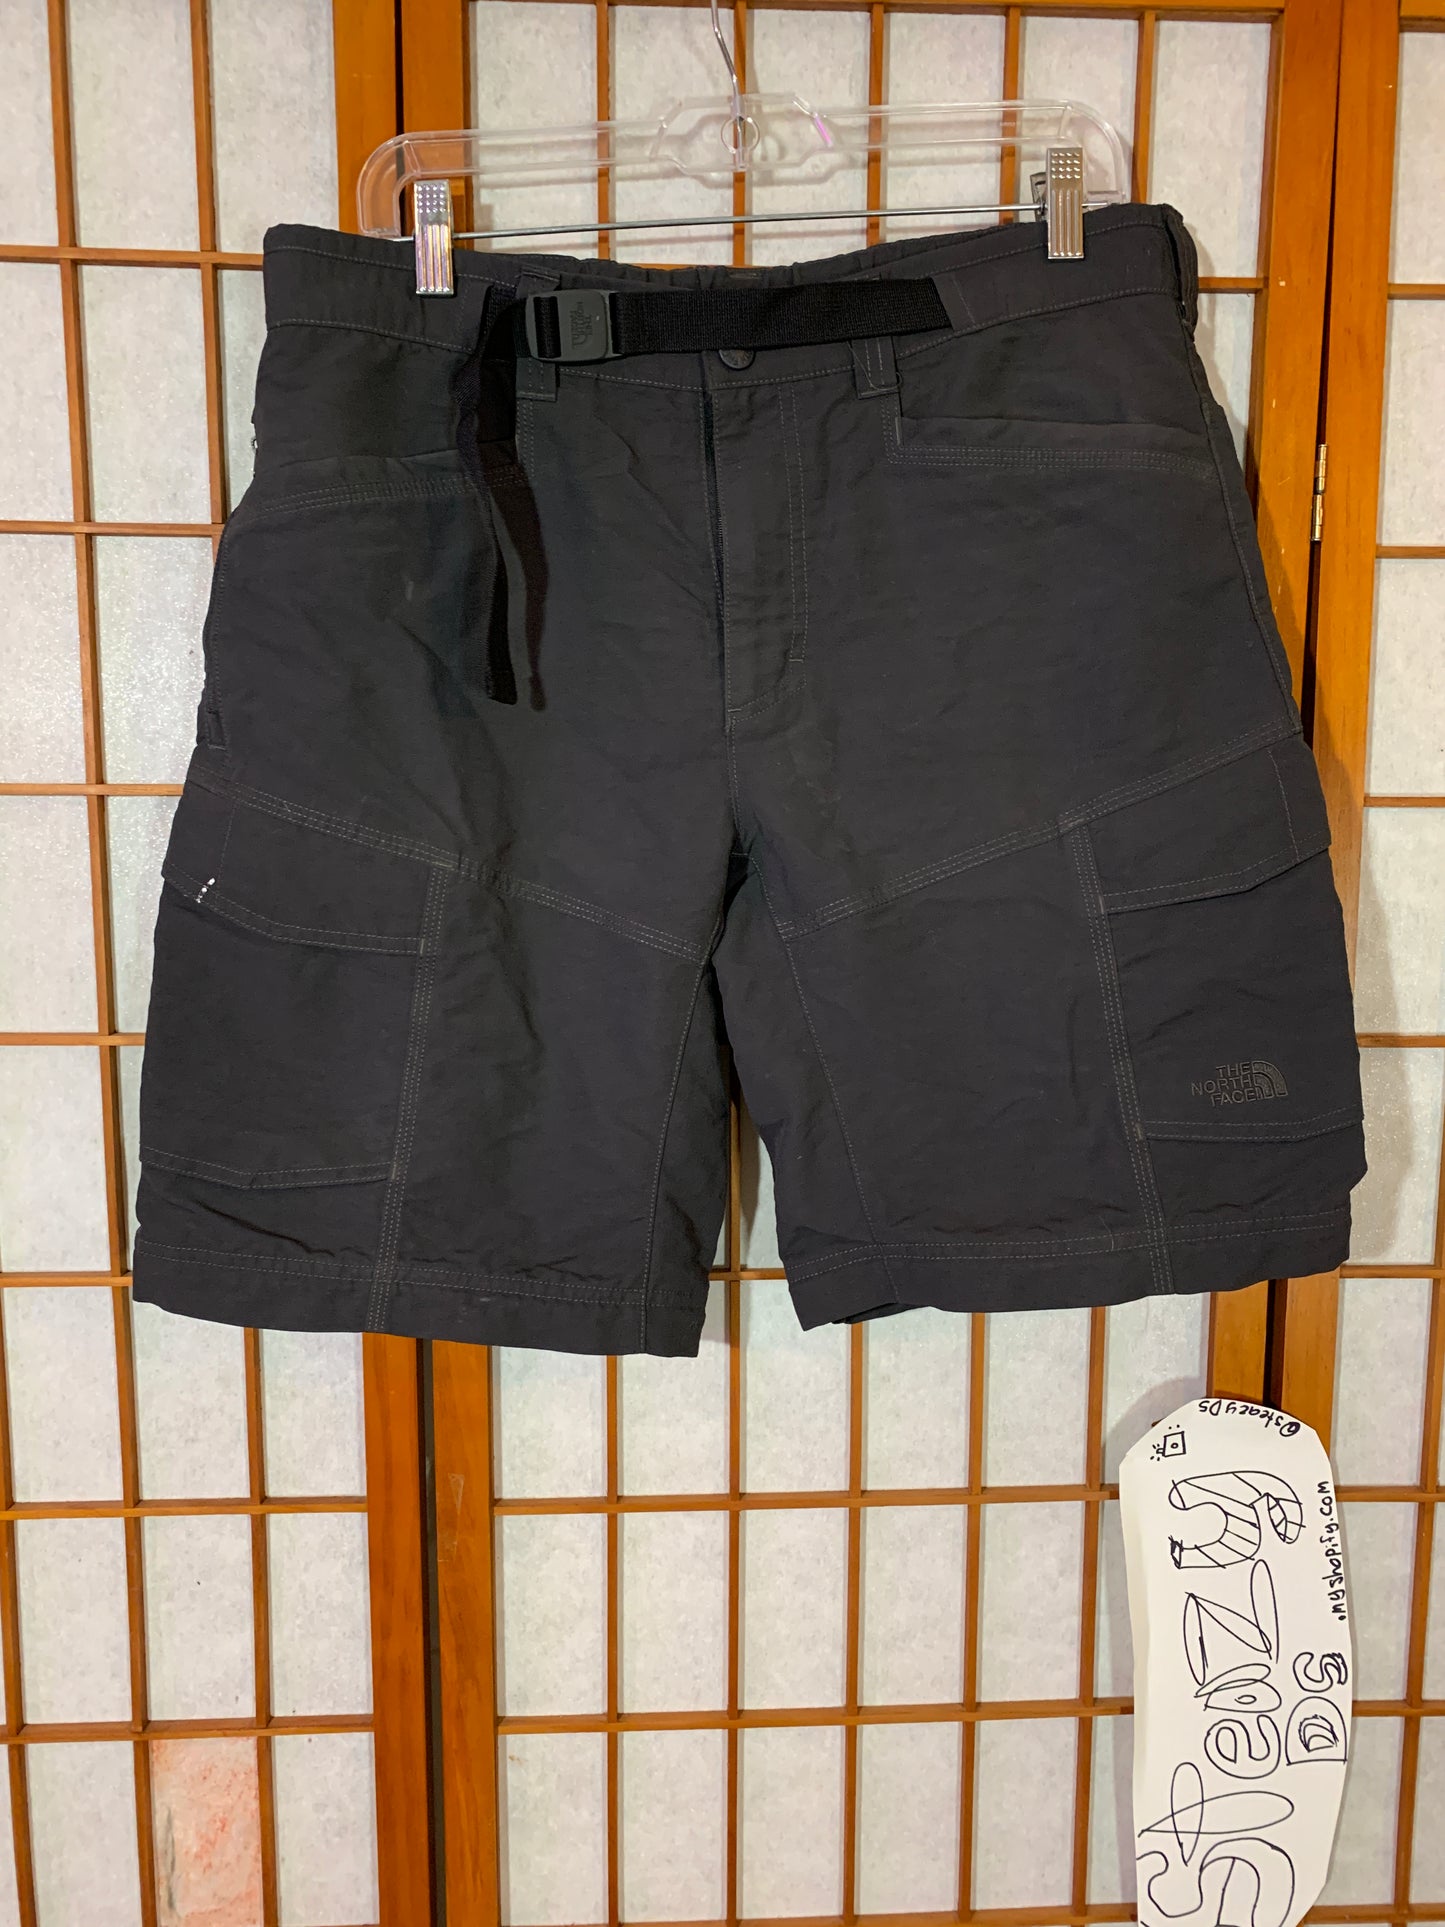 Classic Hard Walking Cargo Shorts, North Face